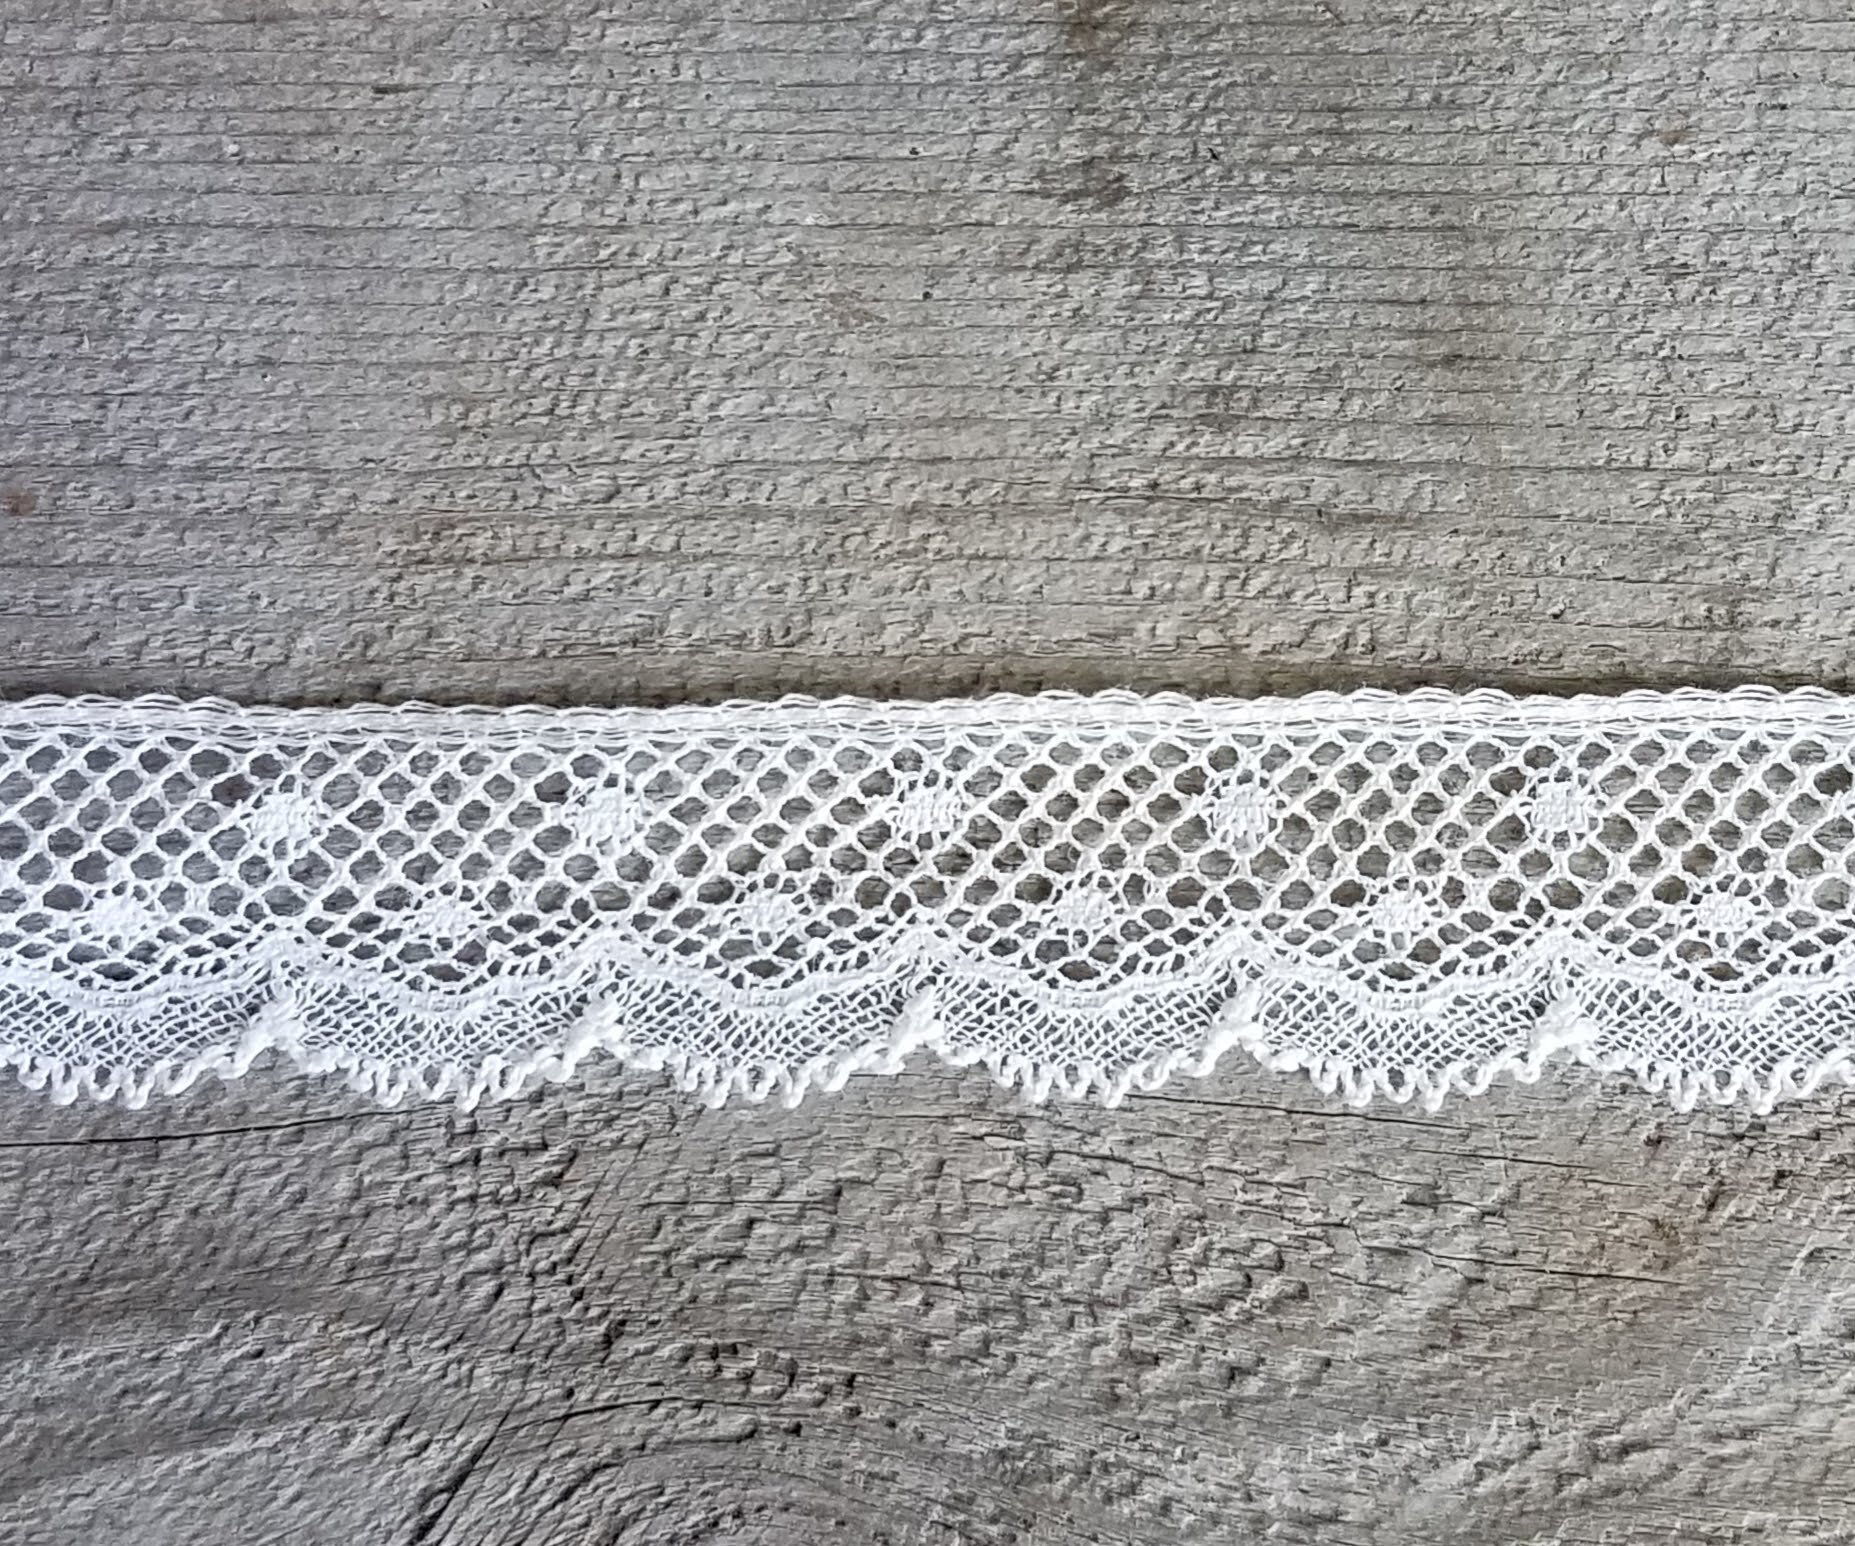 French val lace trim, scalloped - fine cotton lace to trim delicate garments